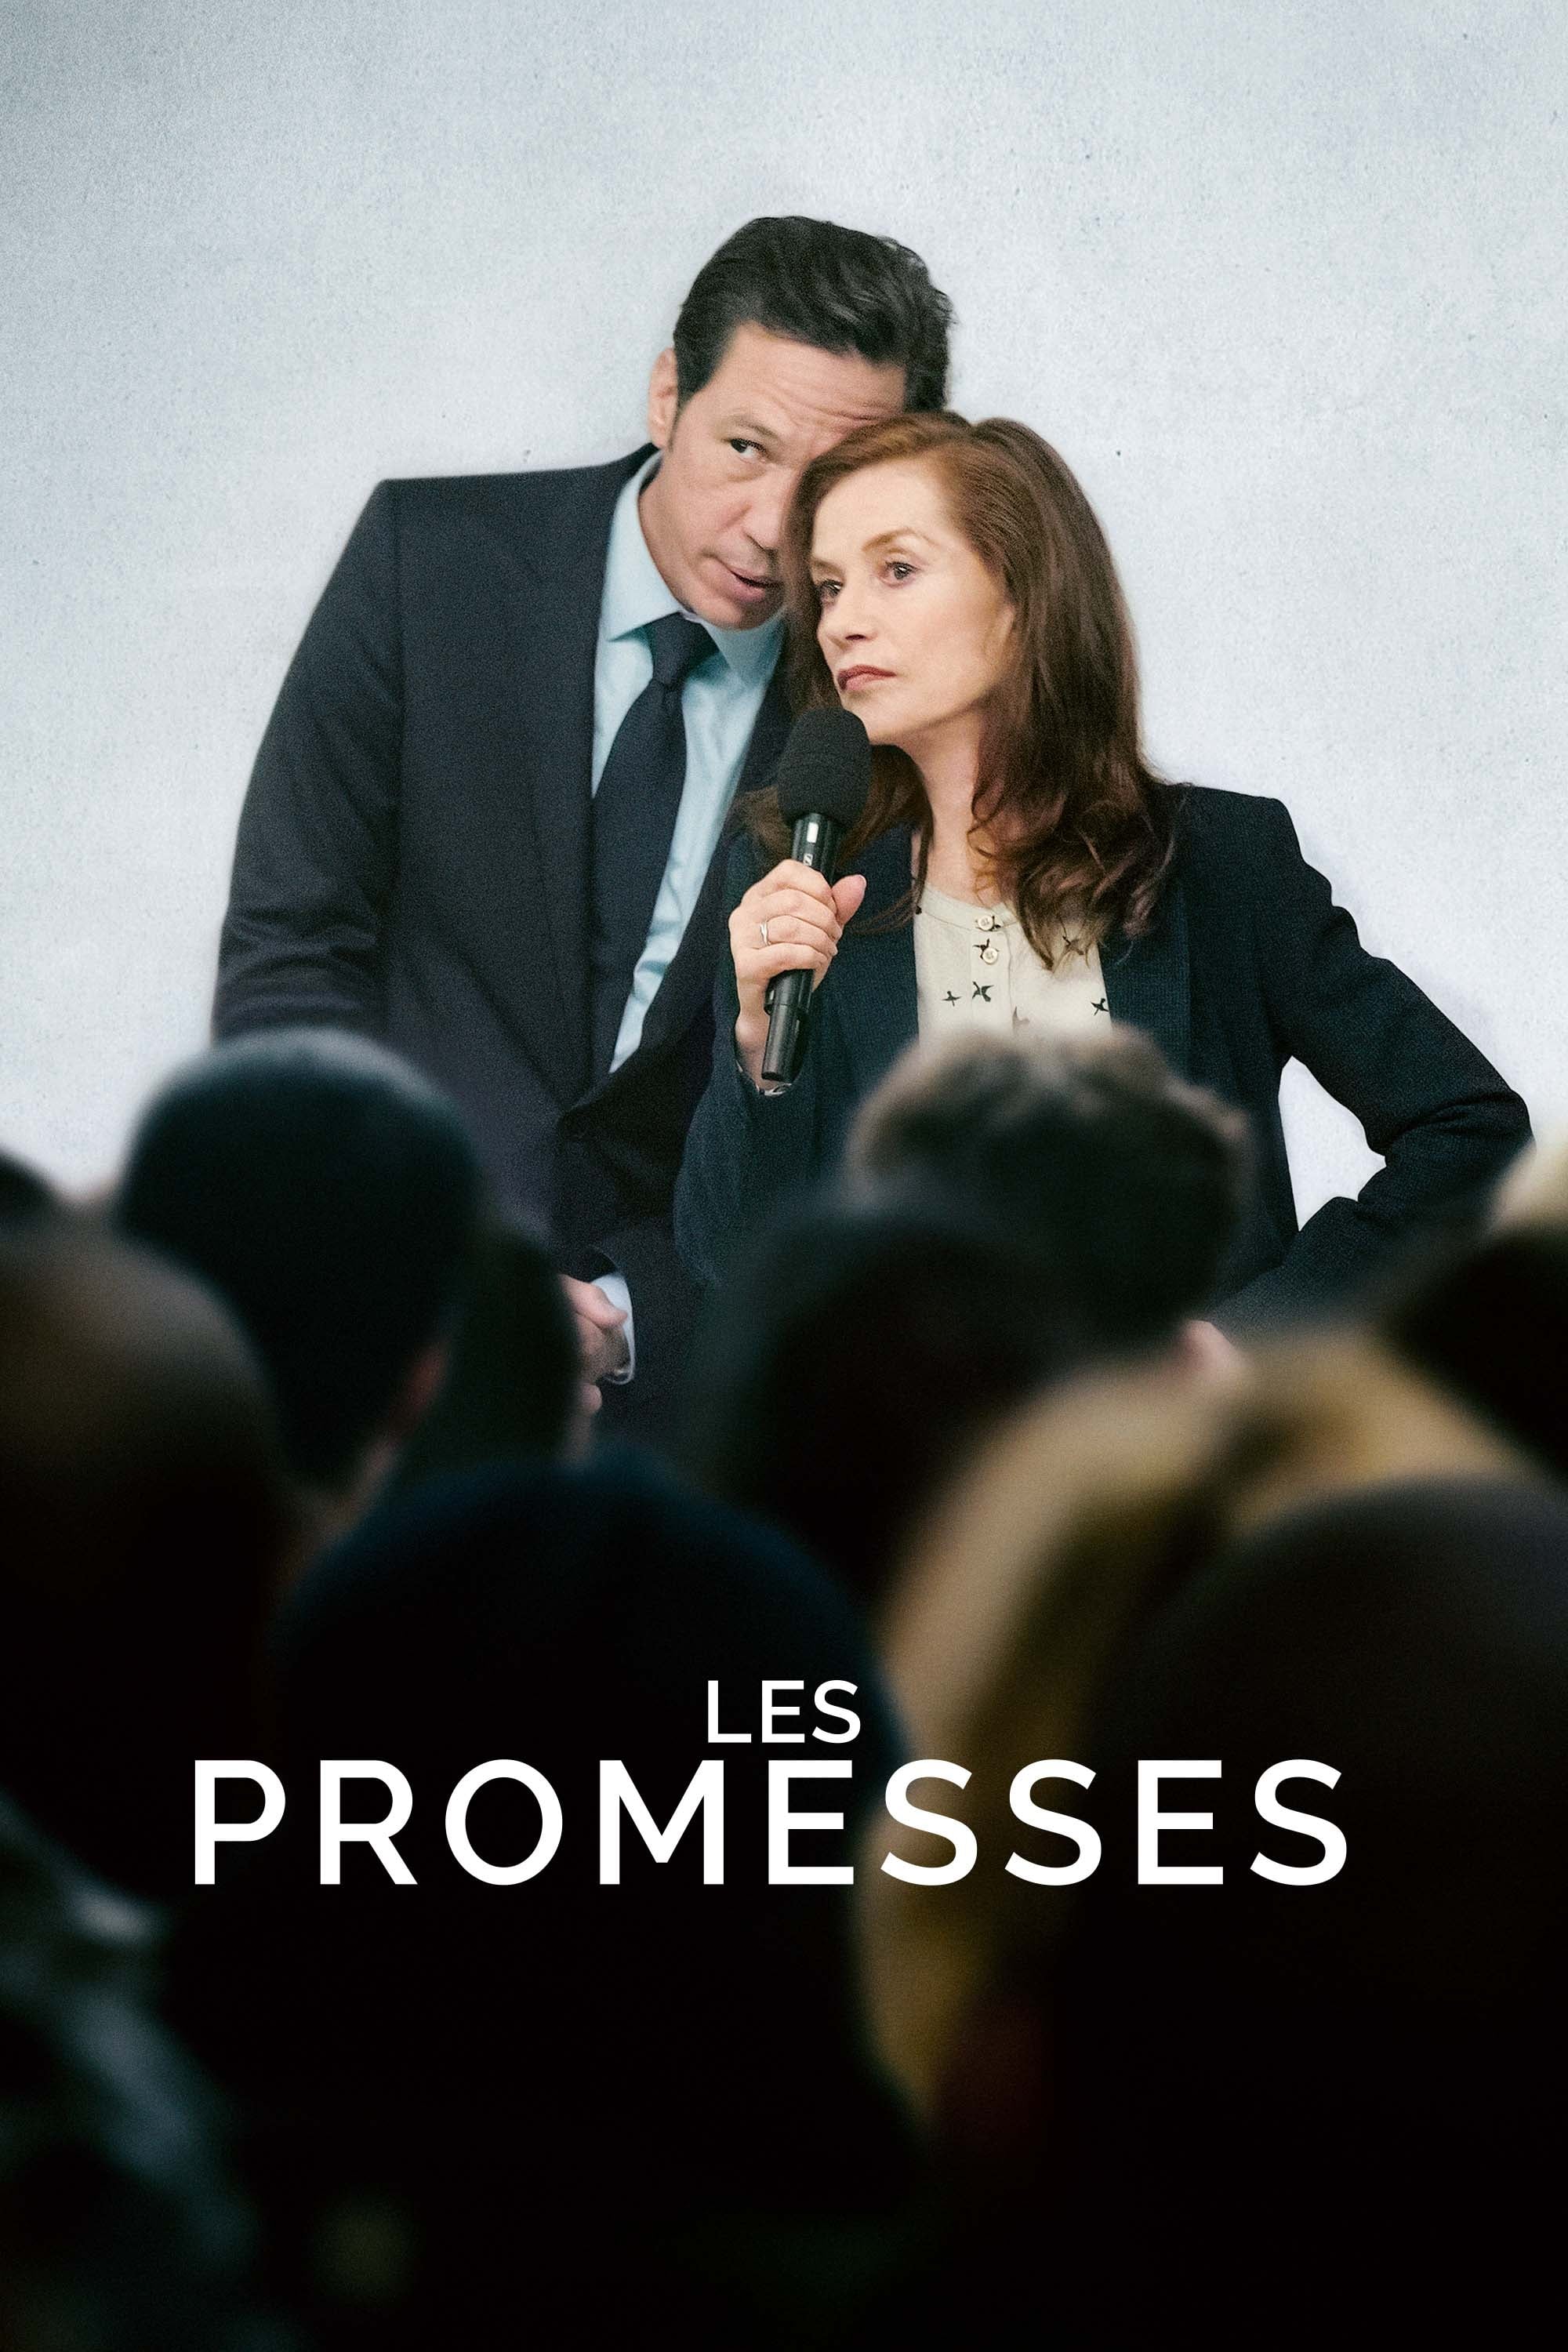 Promesas en Paris